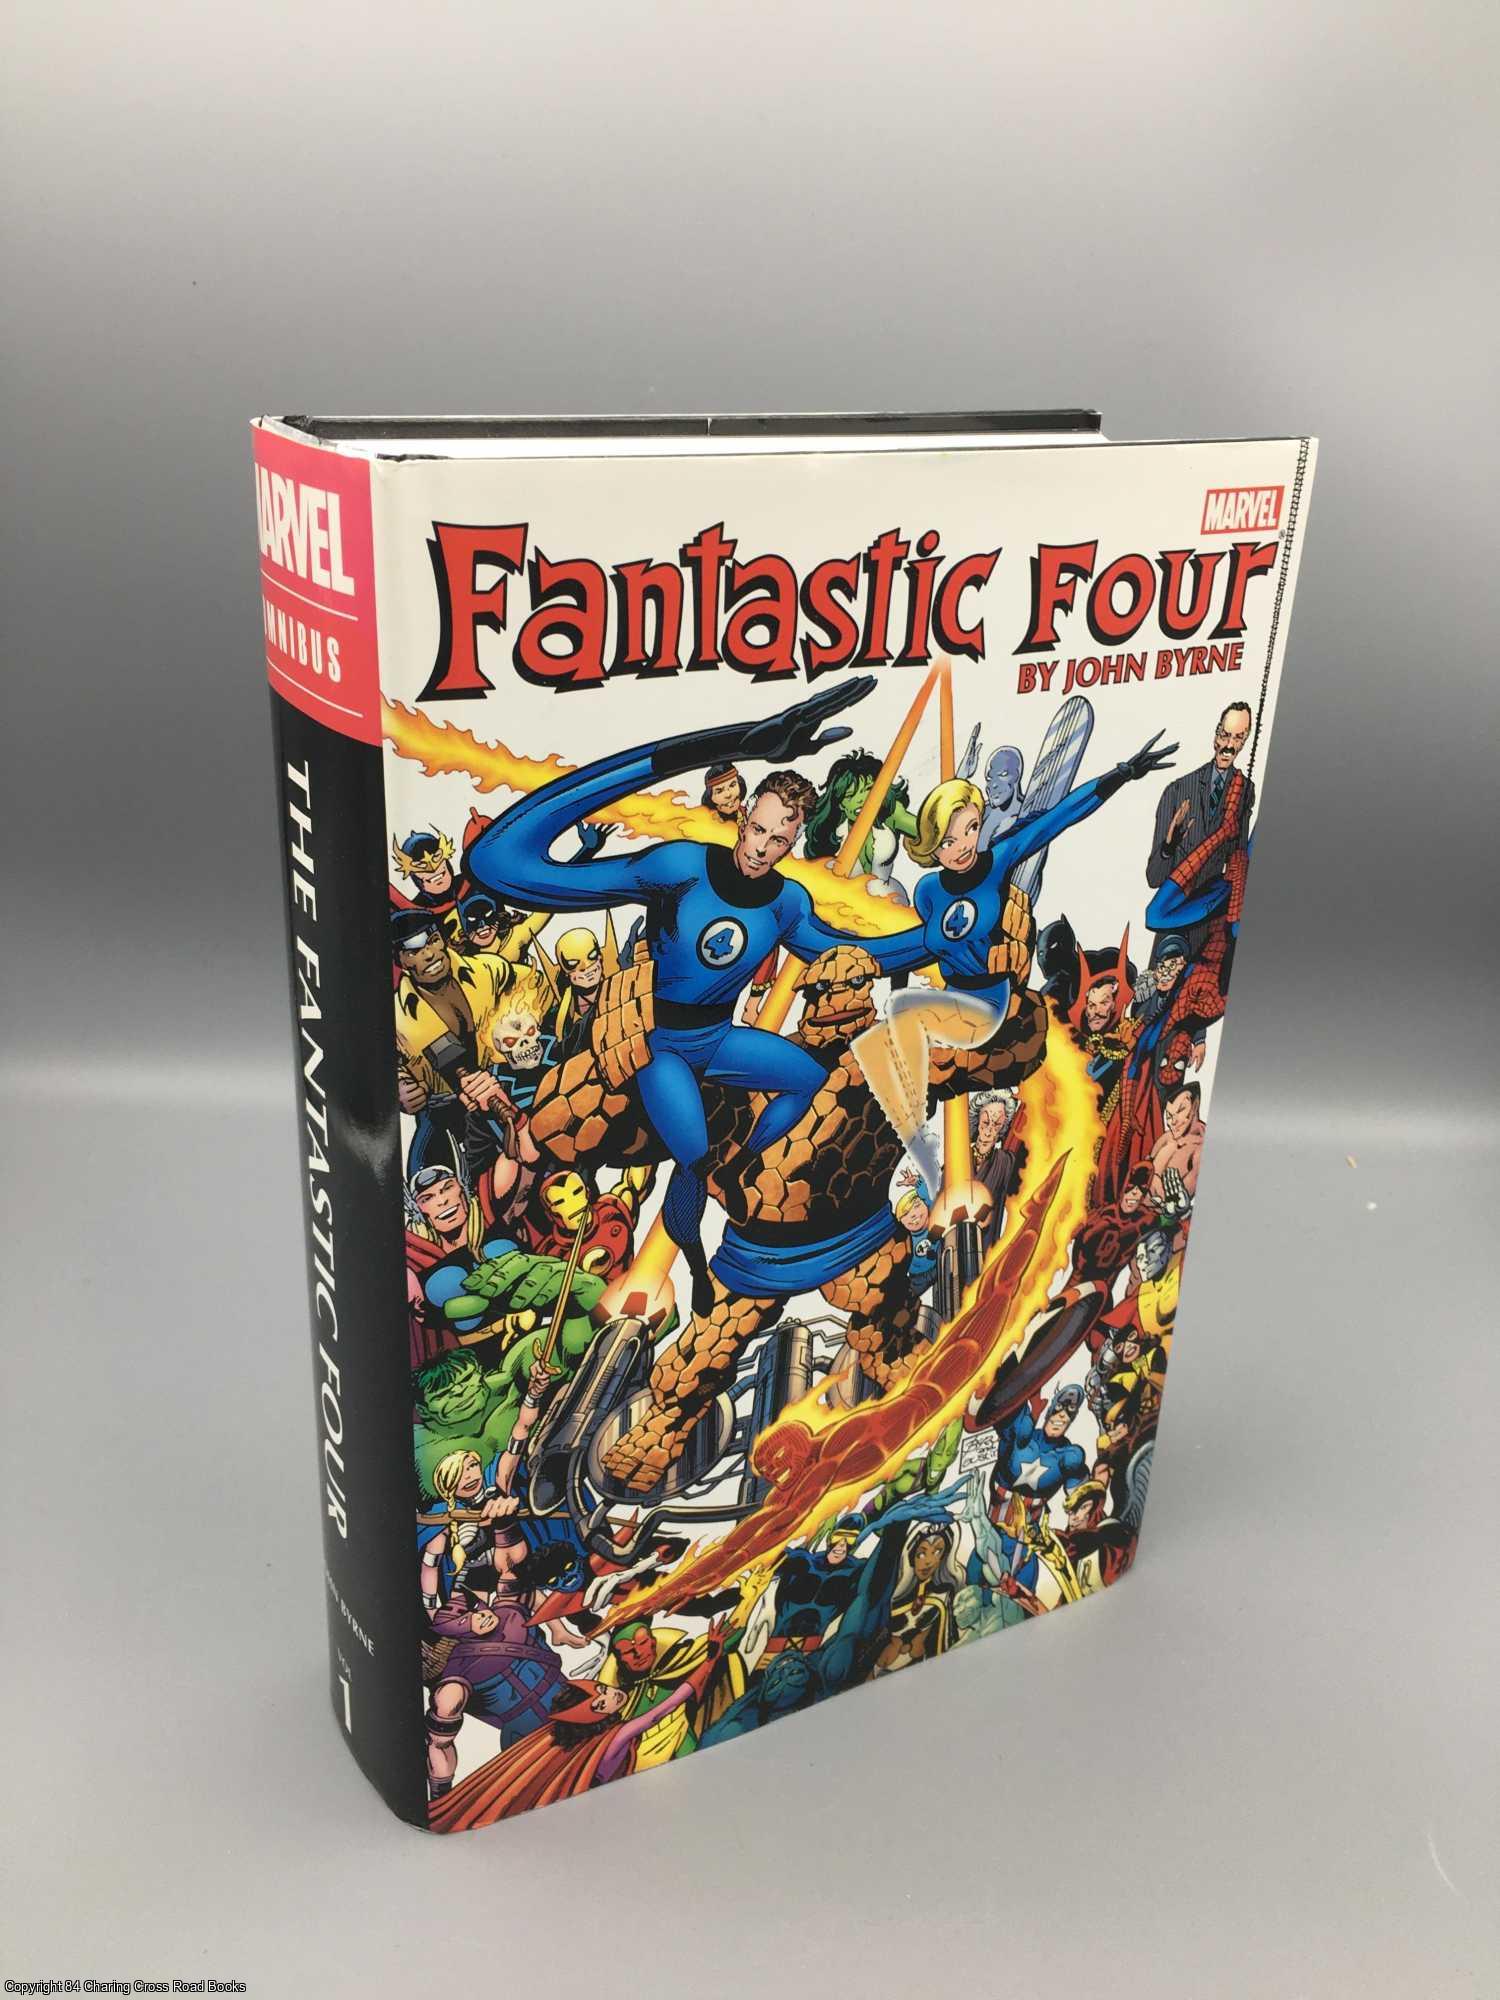 Claremont, Chris - Fantastic Four by John Byrne Omnibus Vol. 1